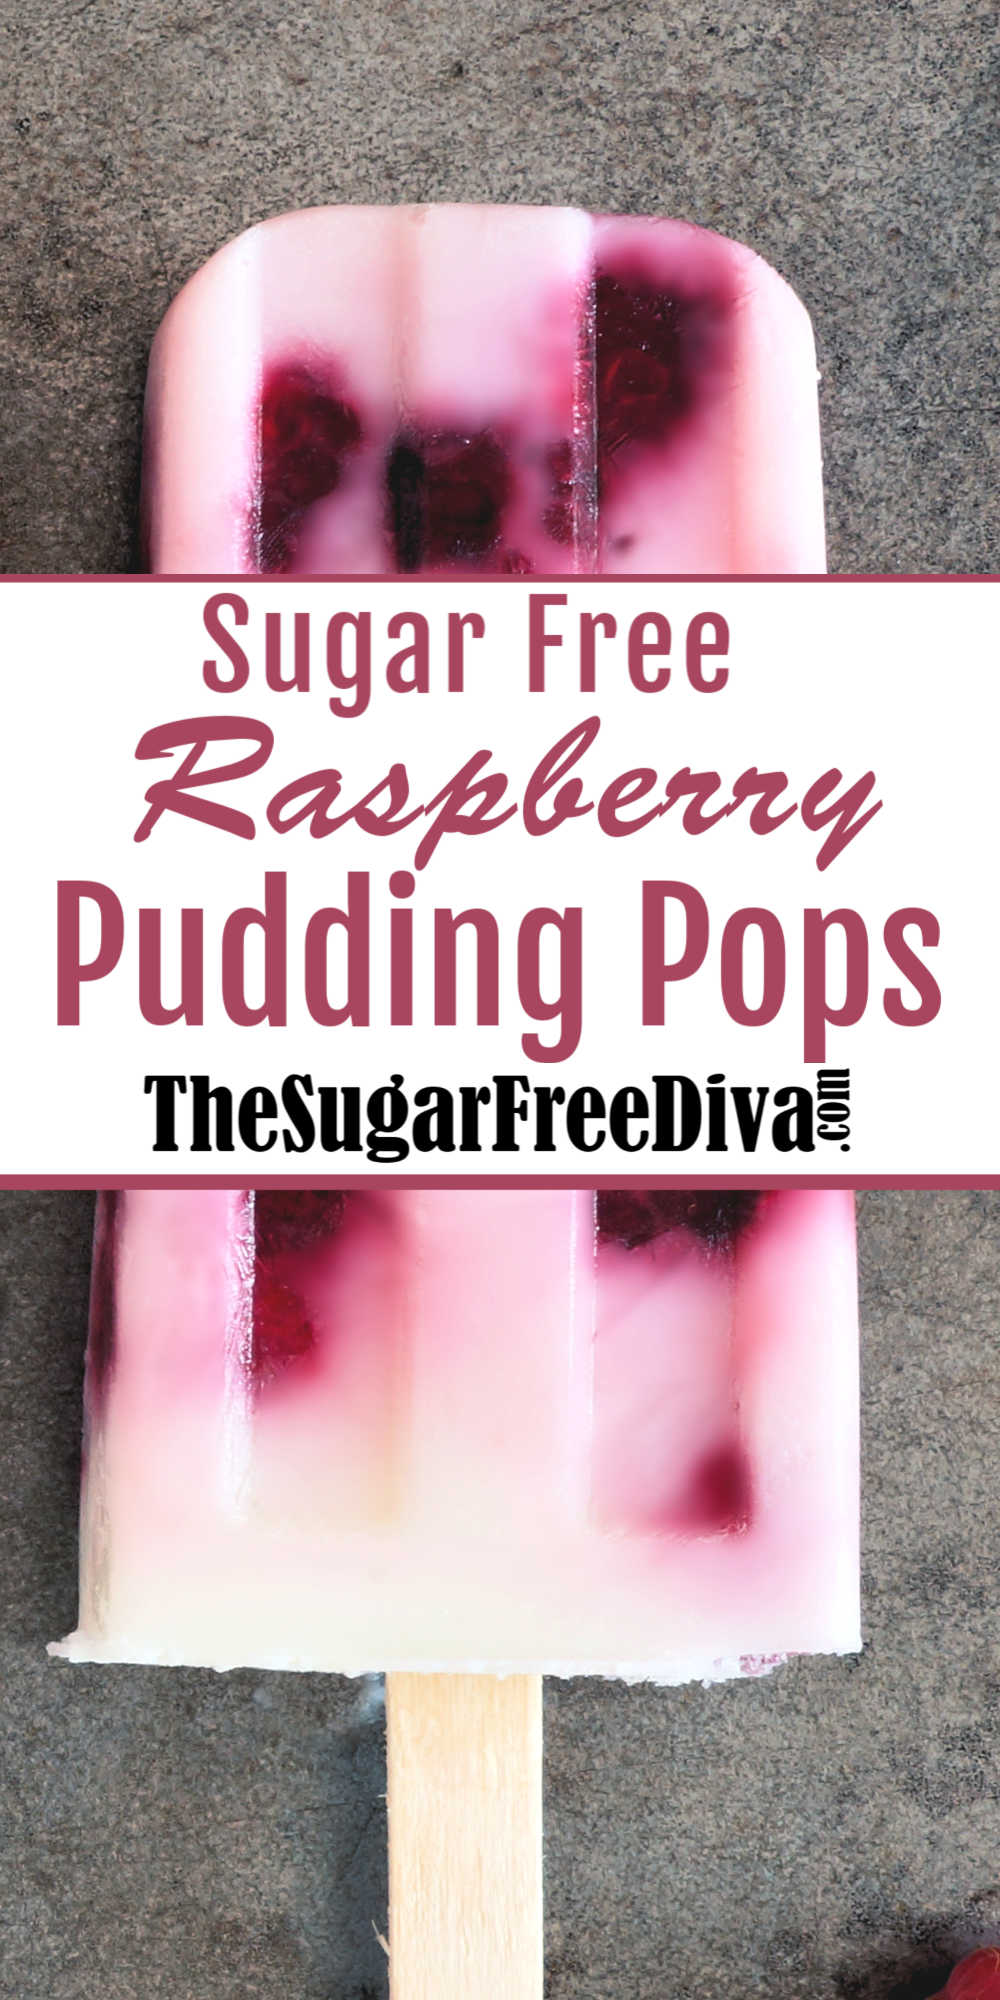 Sugar Free Raspberry Pudding Pops